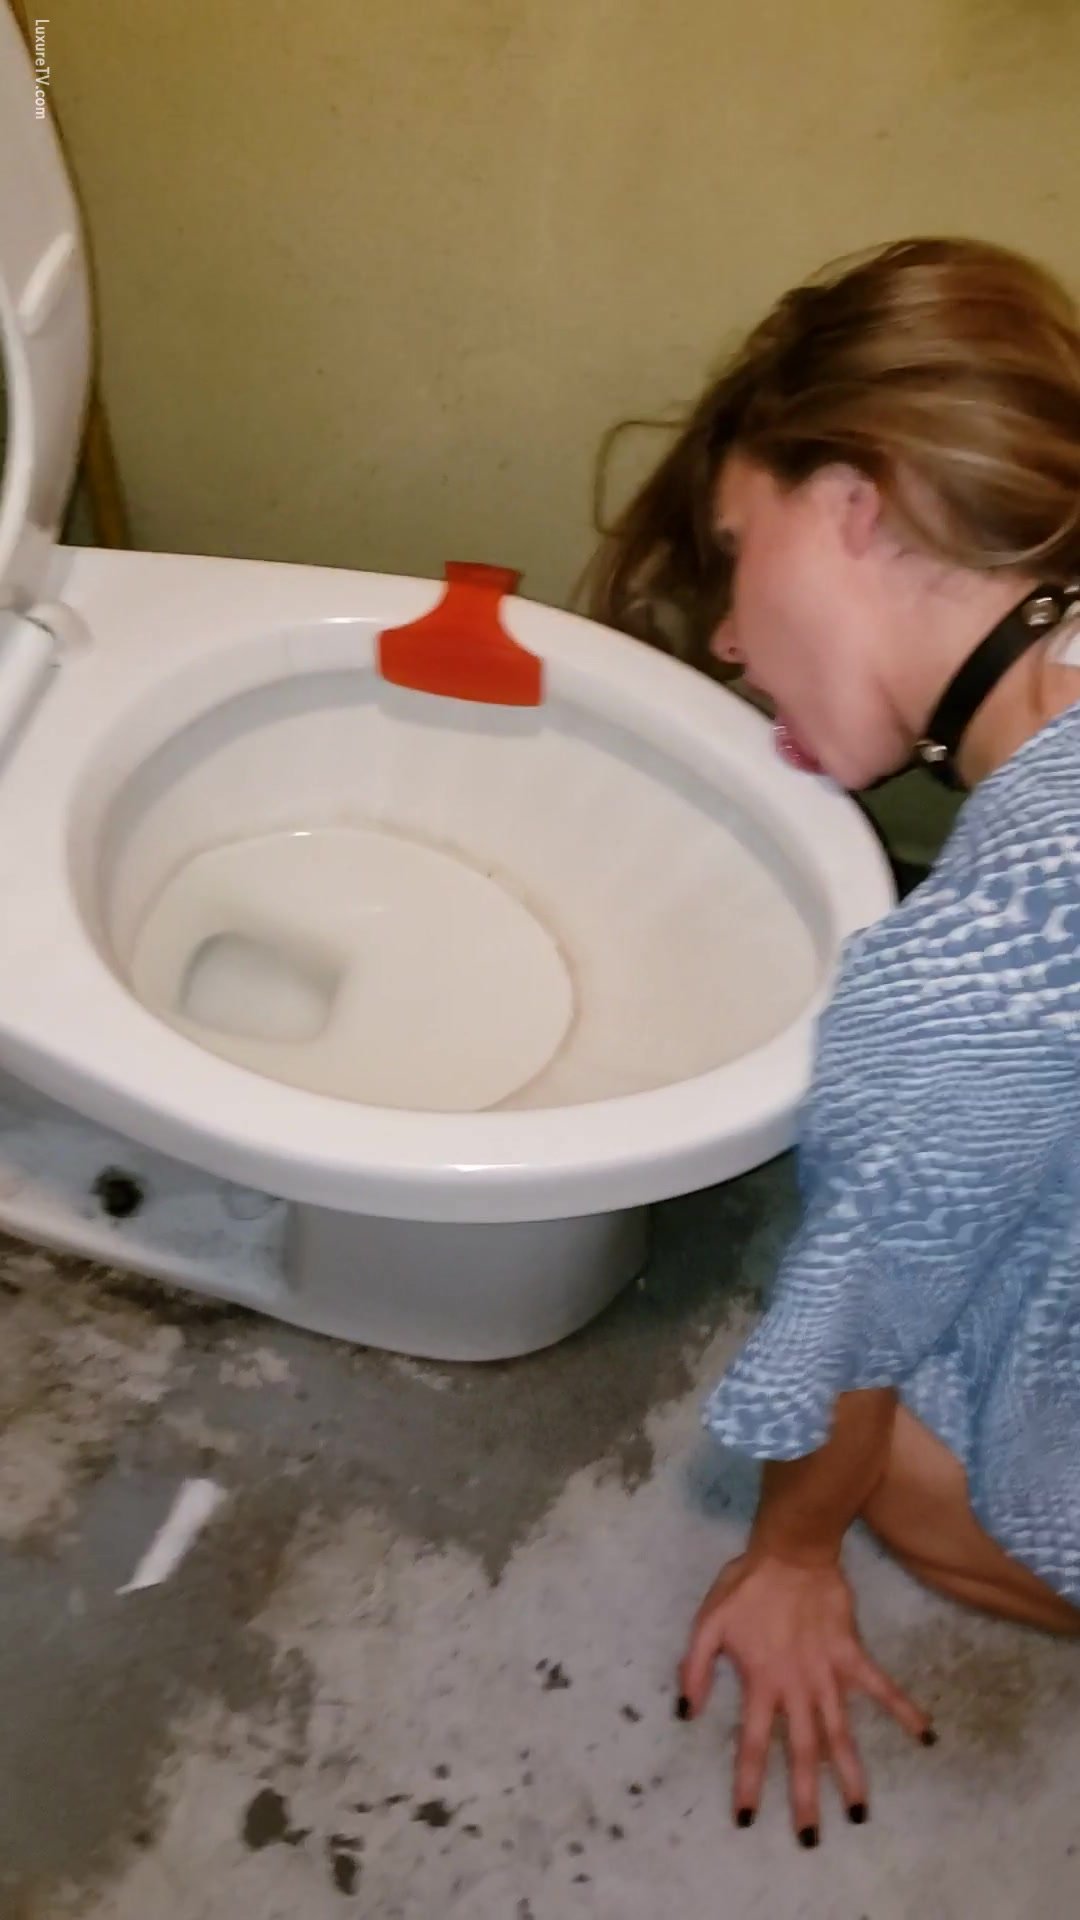 Dirty slut licking public toilet